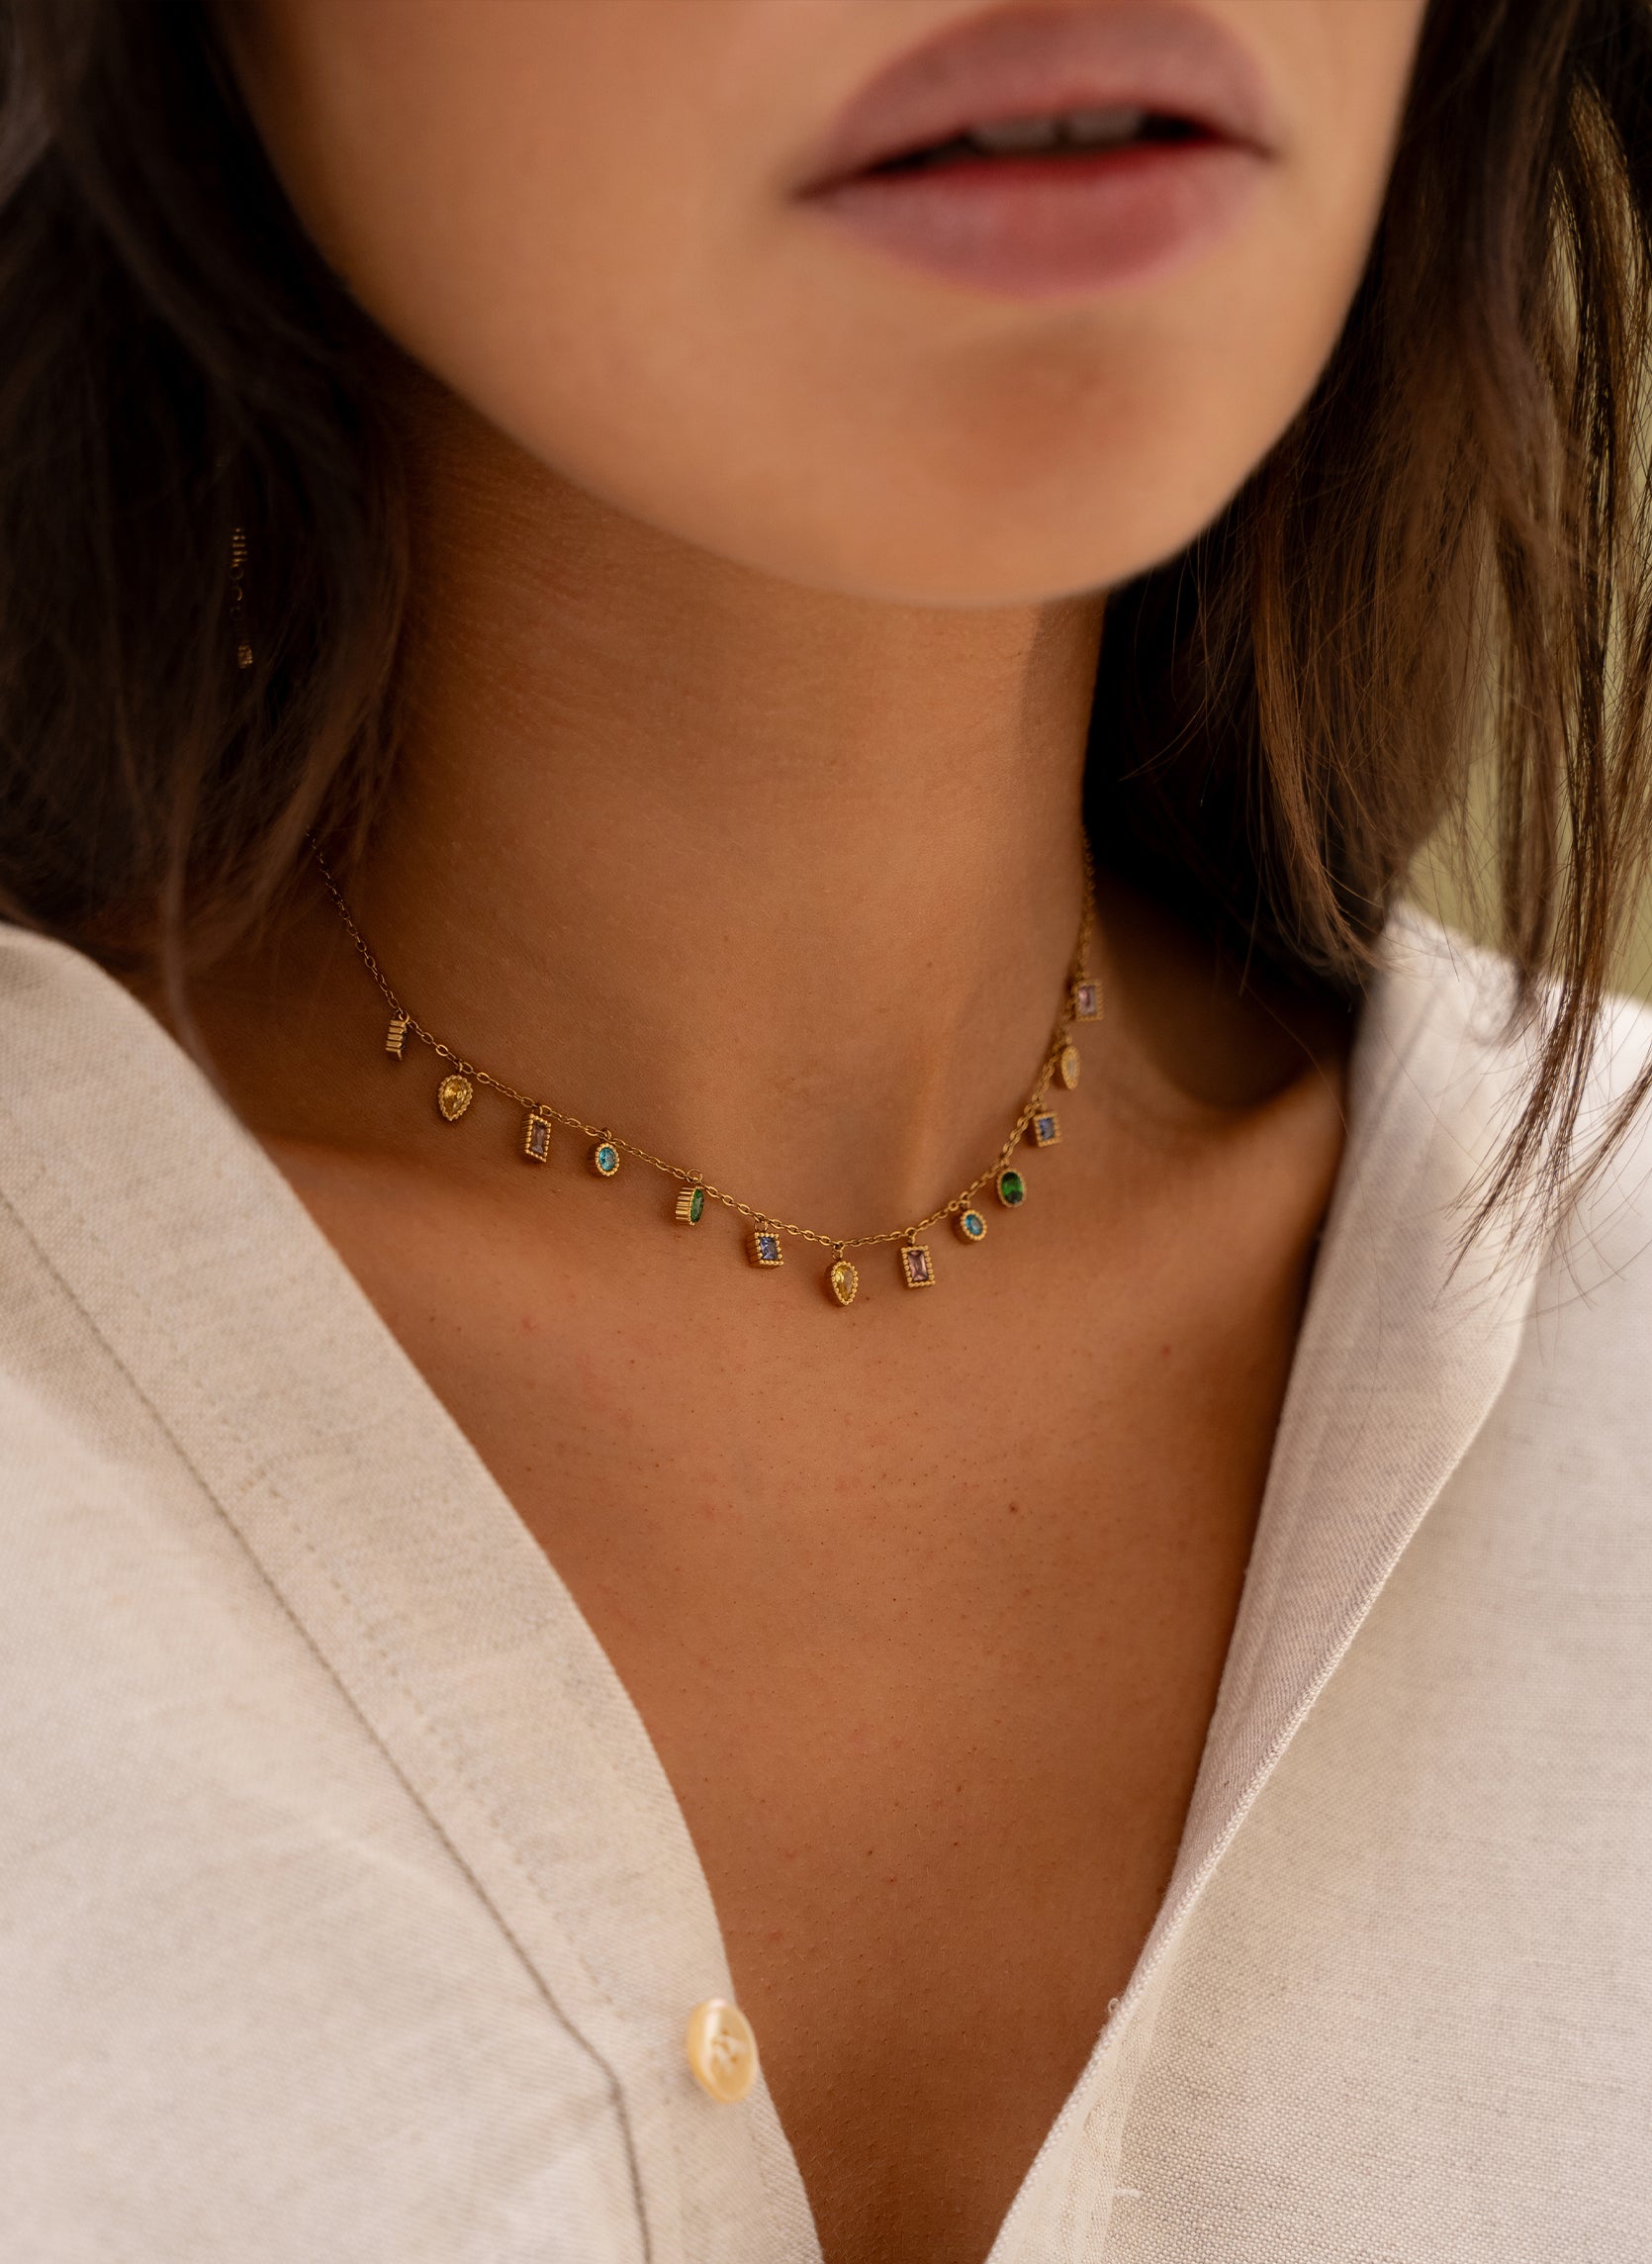 Chain necklace Mohandas